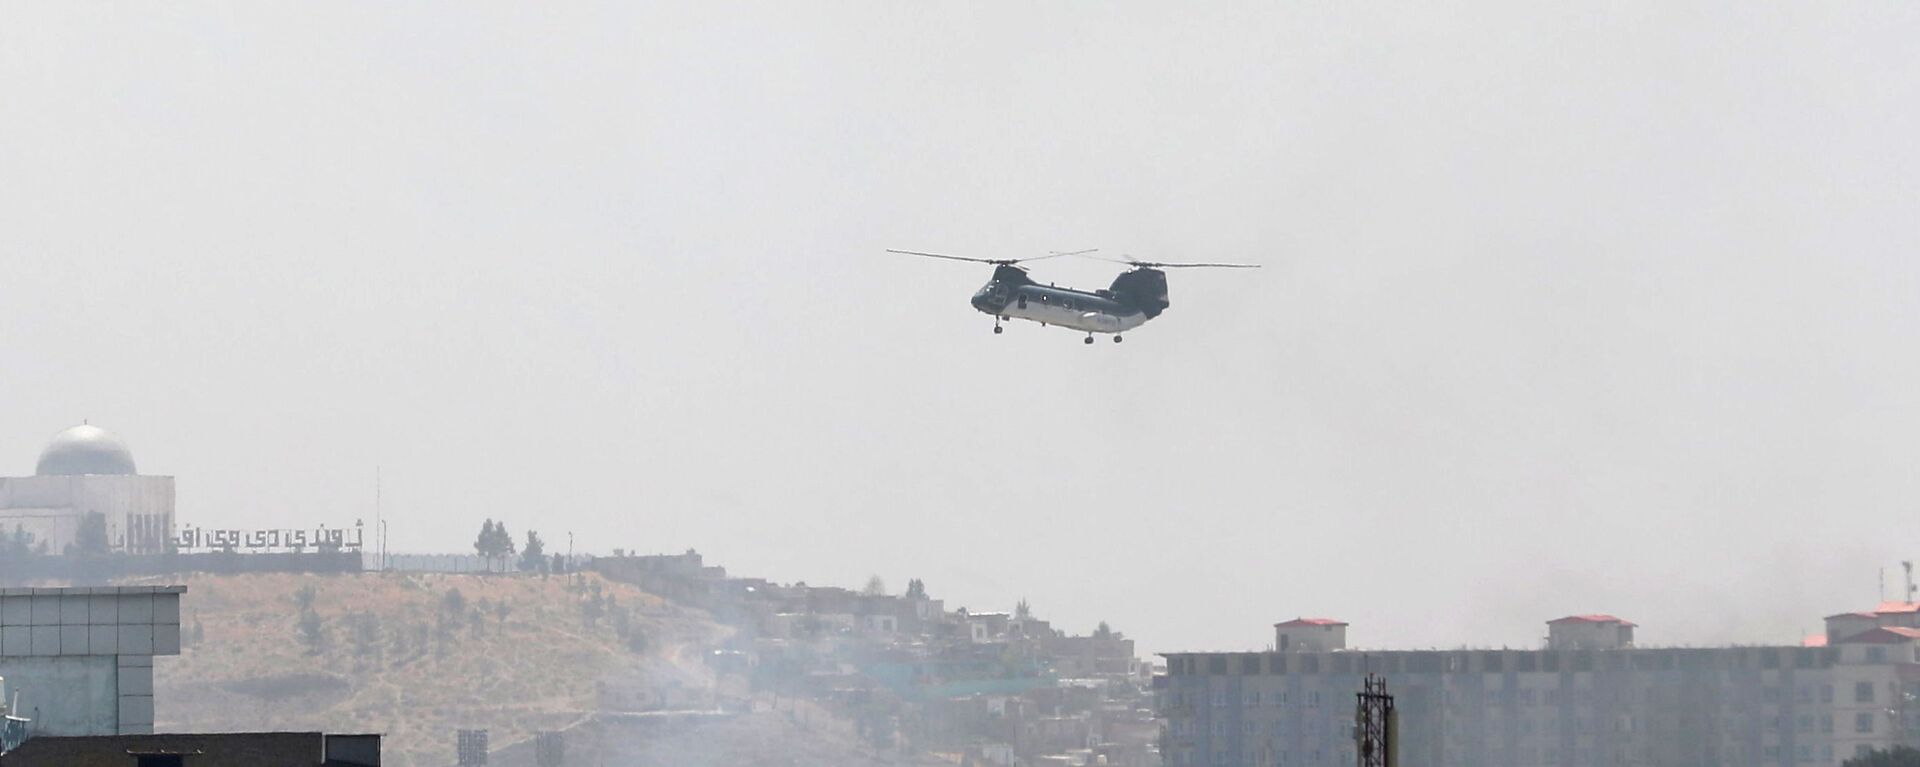 Военный вертолет CH-46 Sea Knight над Кабулом  - Sputnik Ўзбекистон, 1920, 01.12.2021